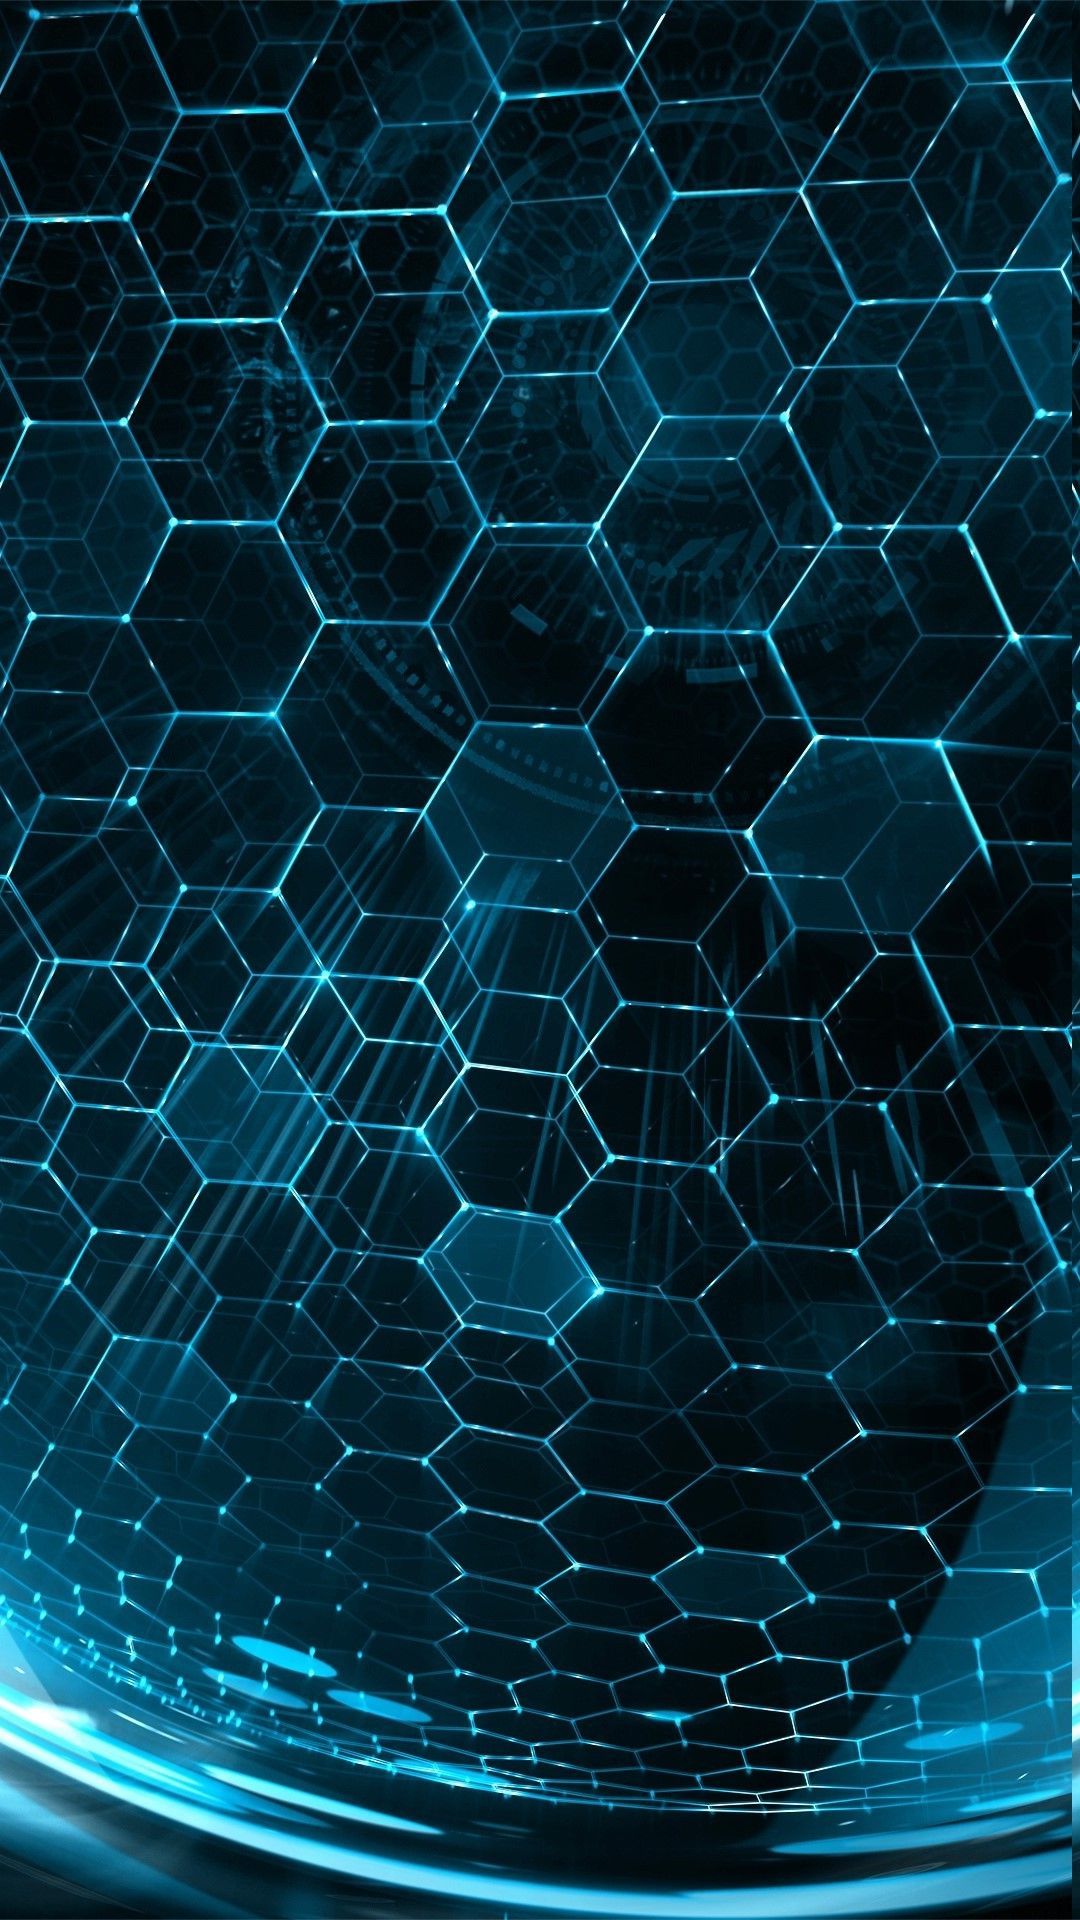 Hexagon Pattern HD. Technology wallpaper, Blue background patterns, 3D wallpaper for mobile